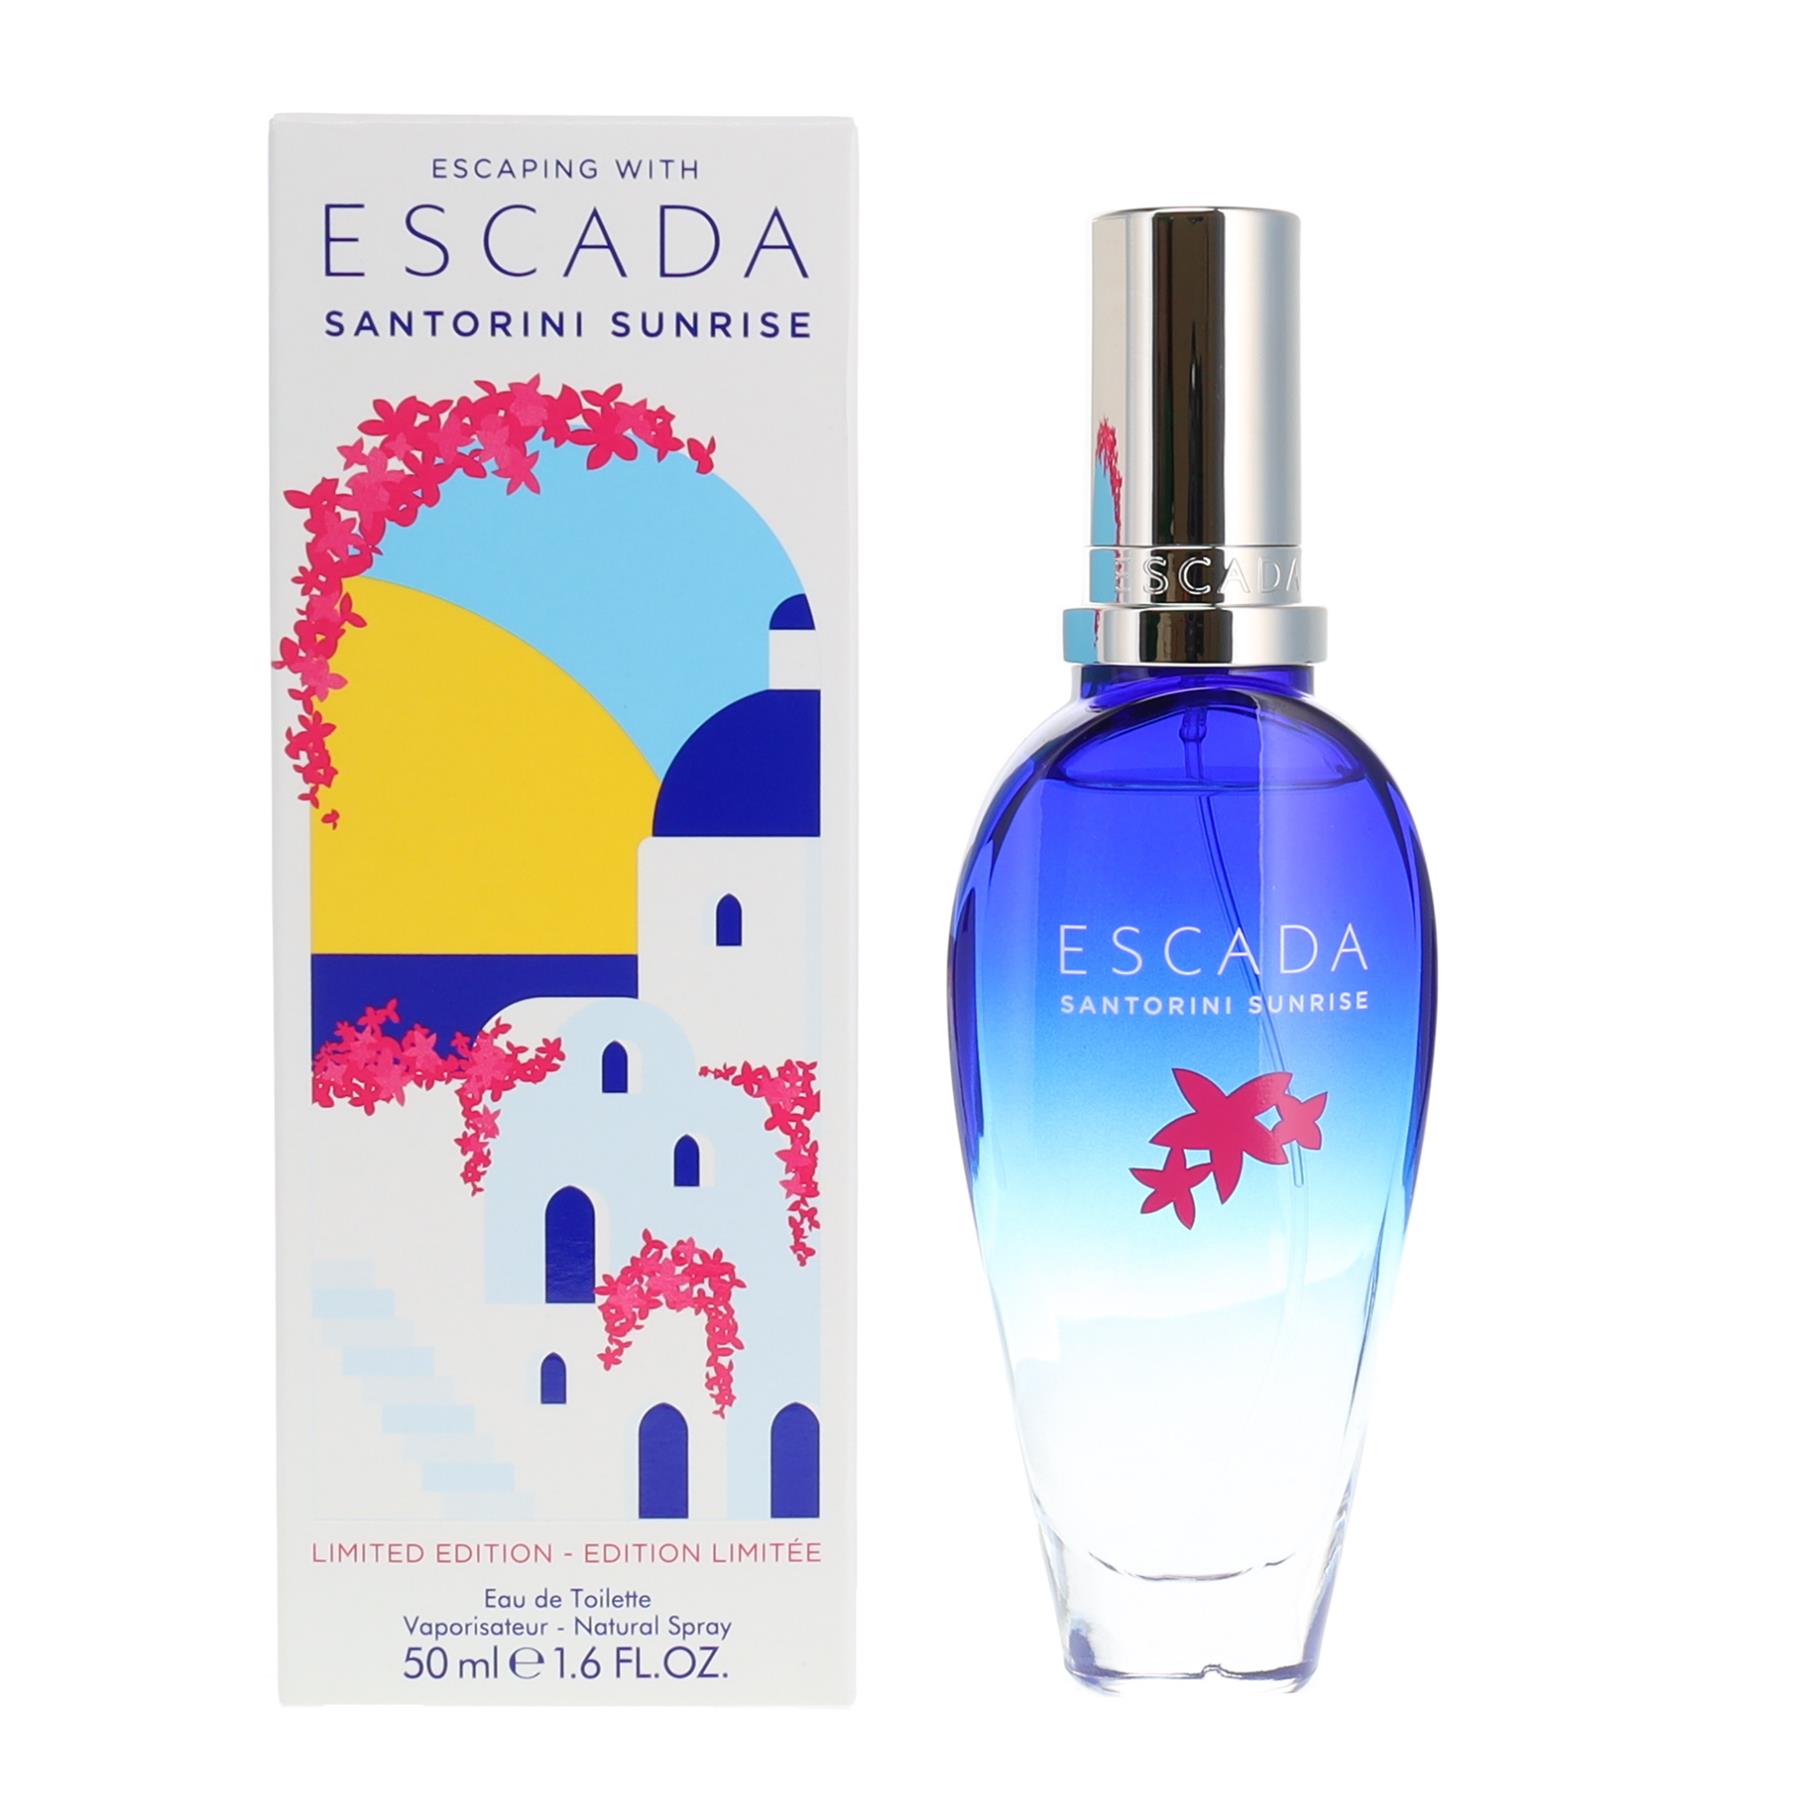 Escada Santorini Sunrise 50ml Eau de Toilette Spray for Her from Perfume Plus Direct